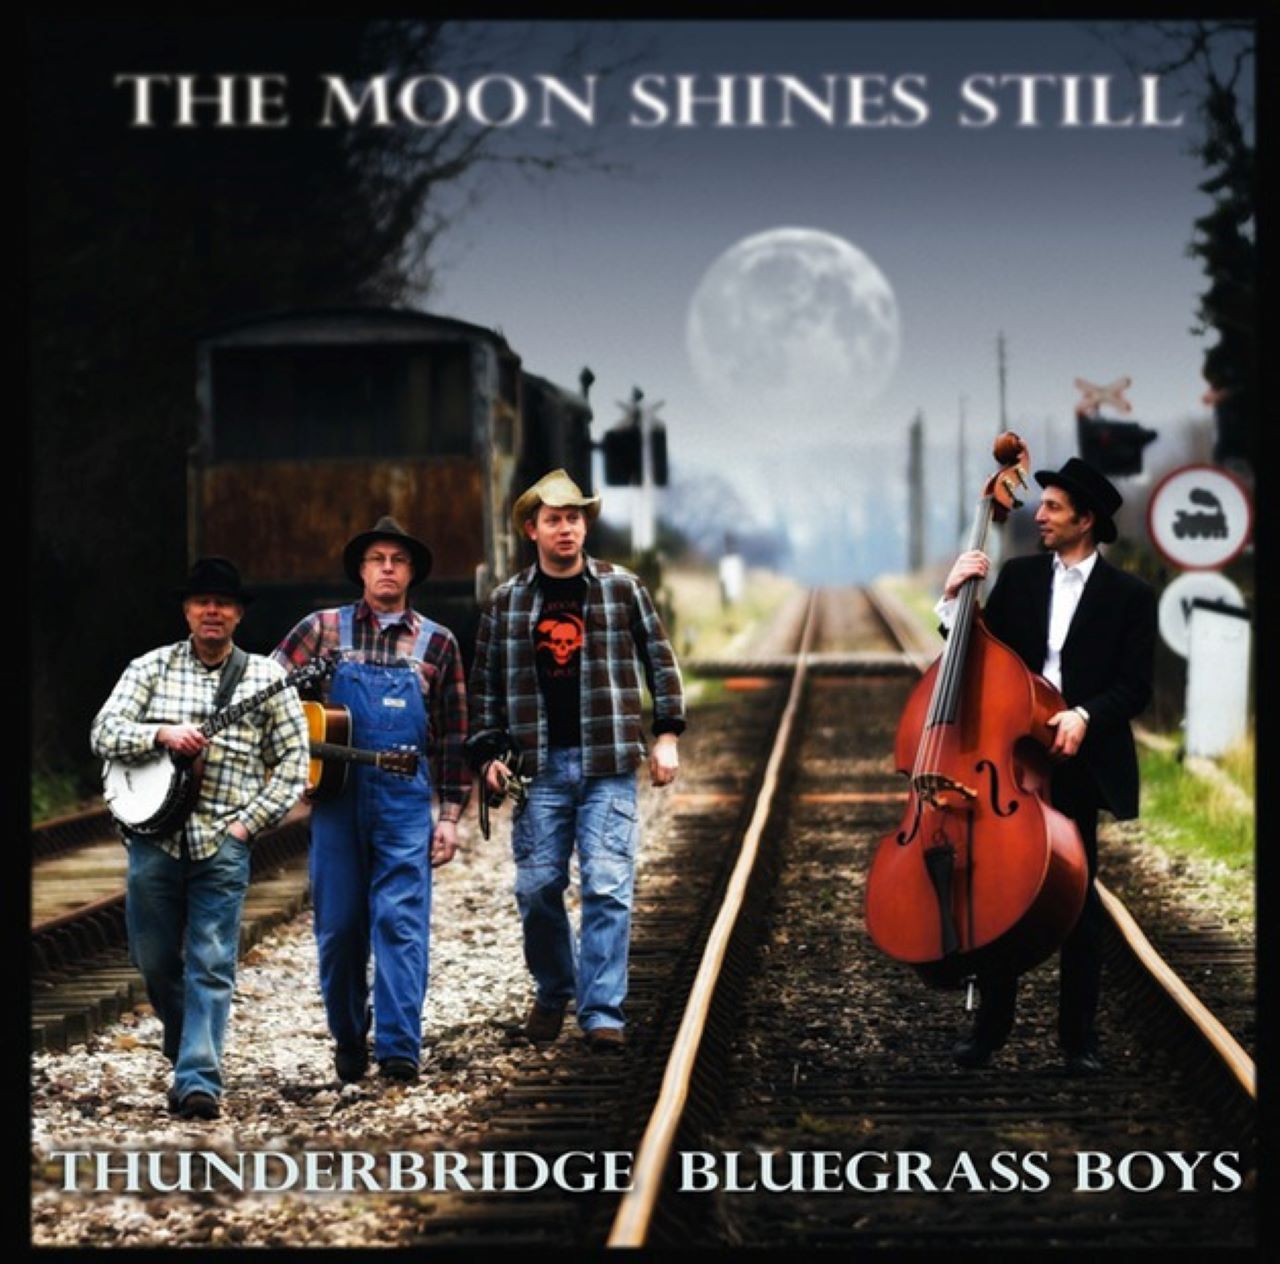 Thunderbridge Bluegrass Boys – The Moon Shines Still cover album